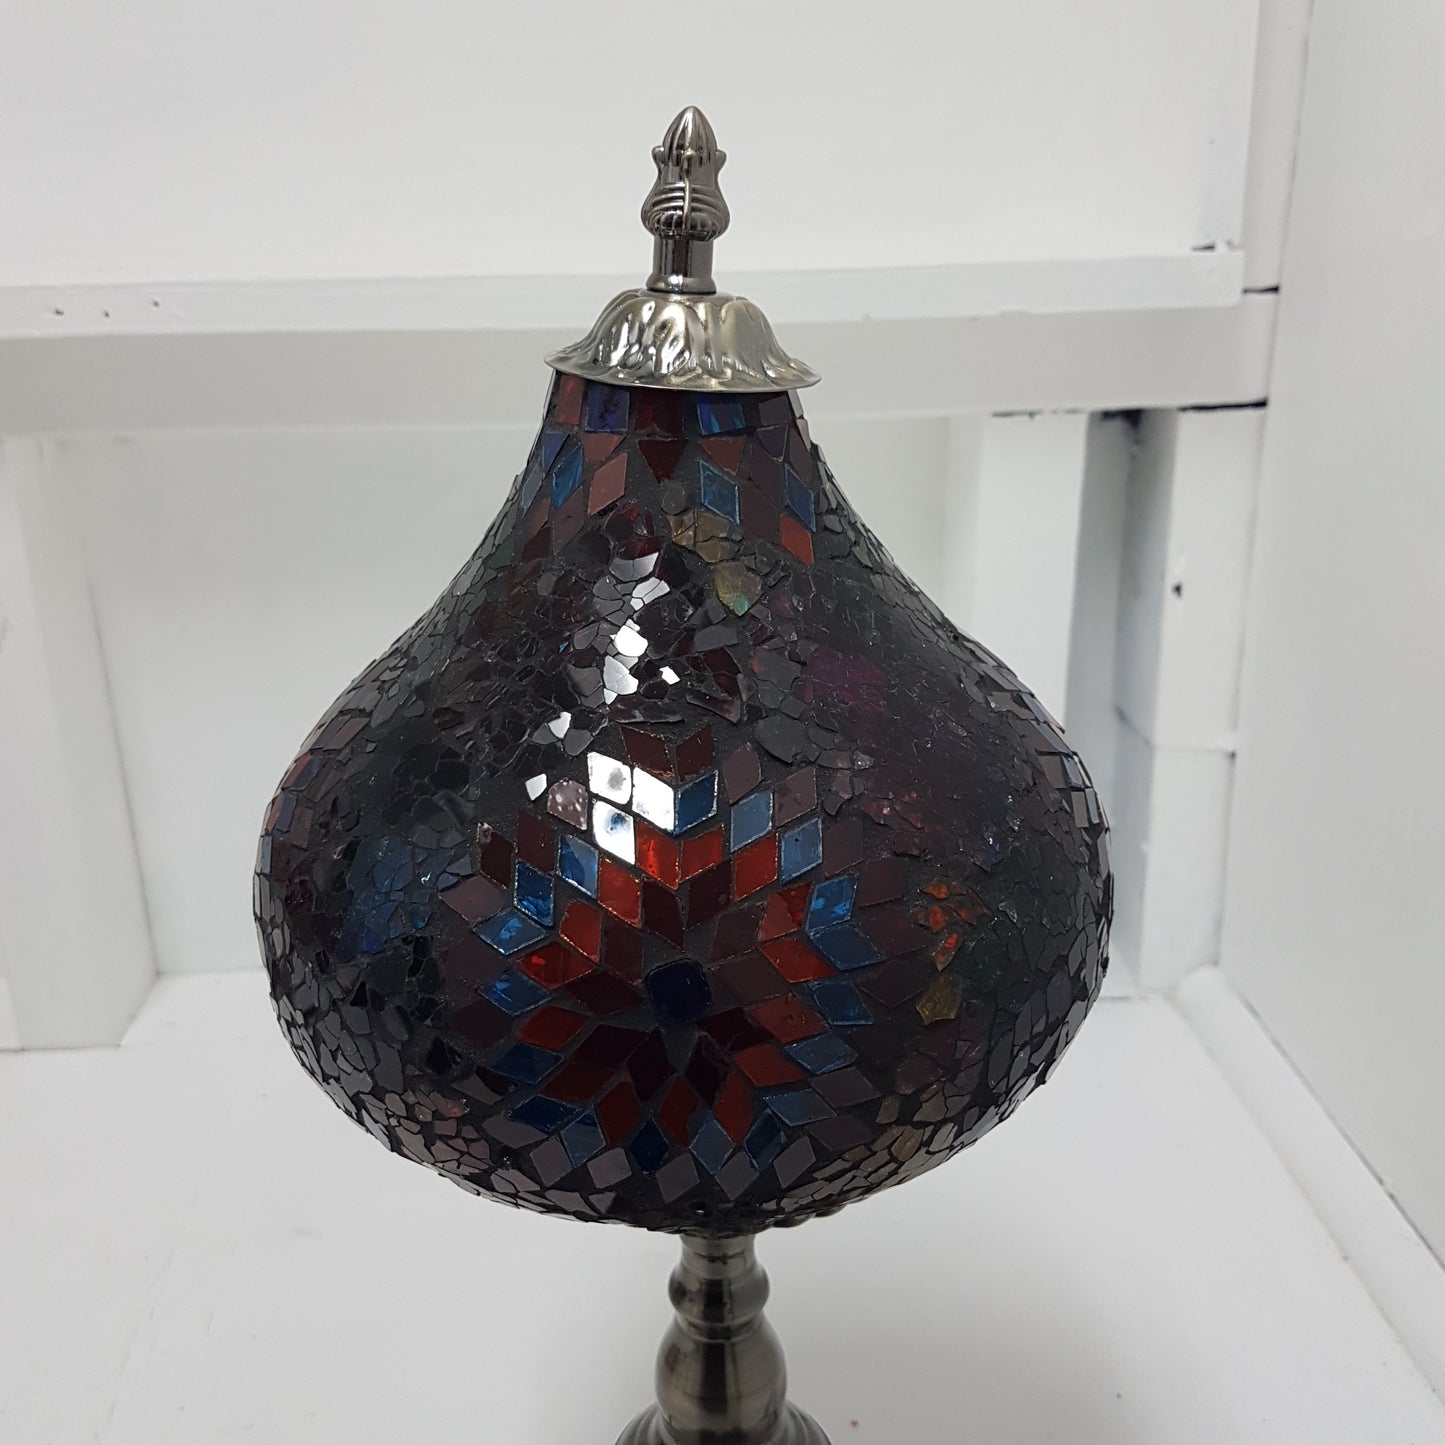 Turkish Mosaic Lamp - TL13